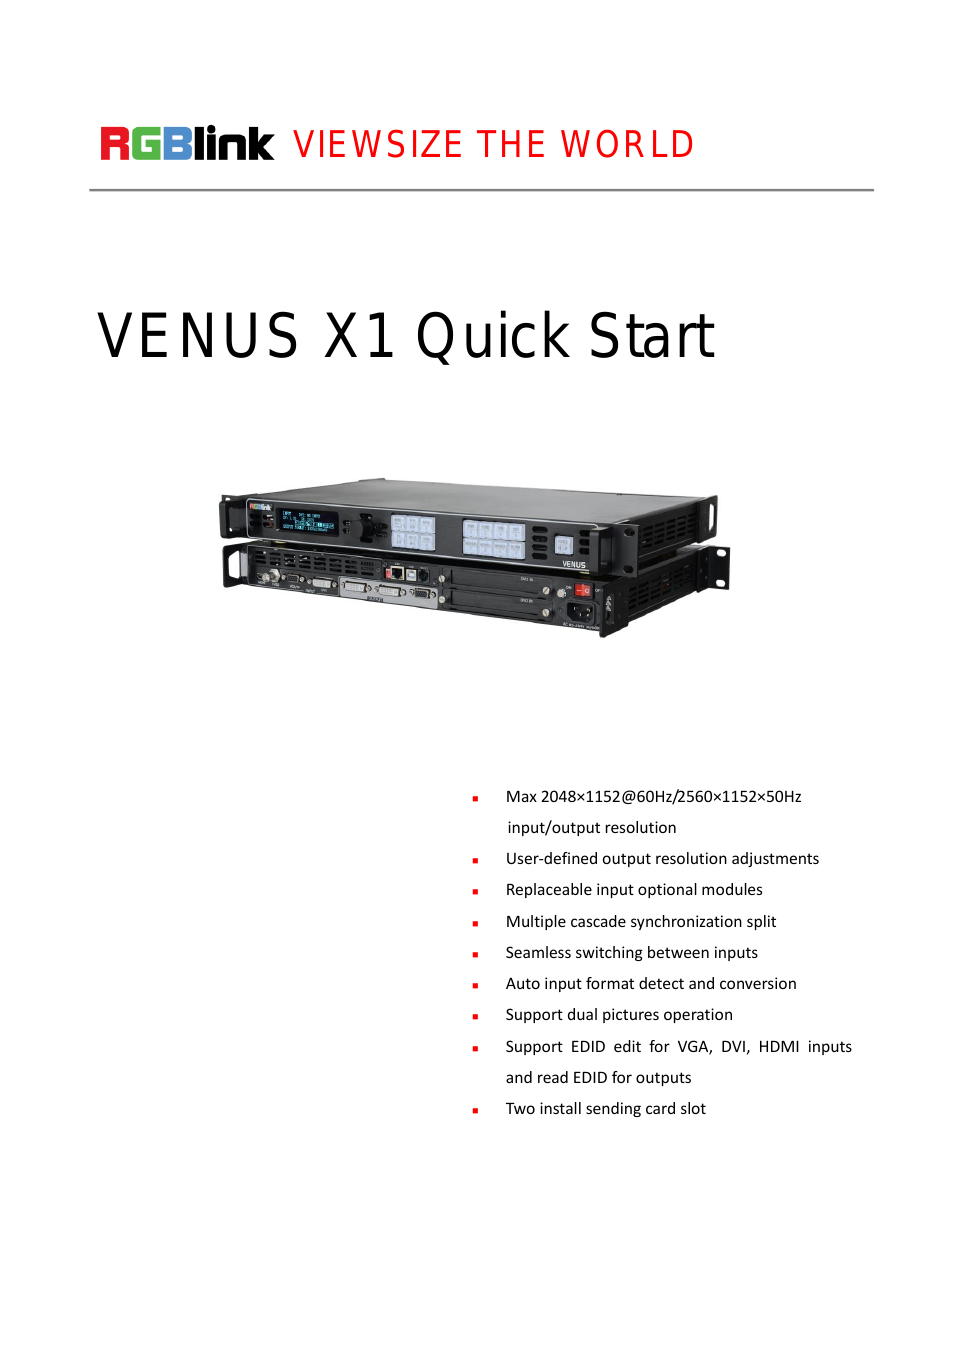 VENUS X1 Quick Start